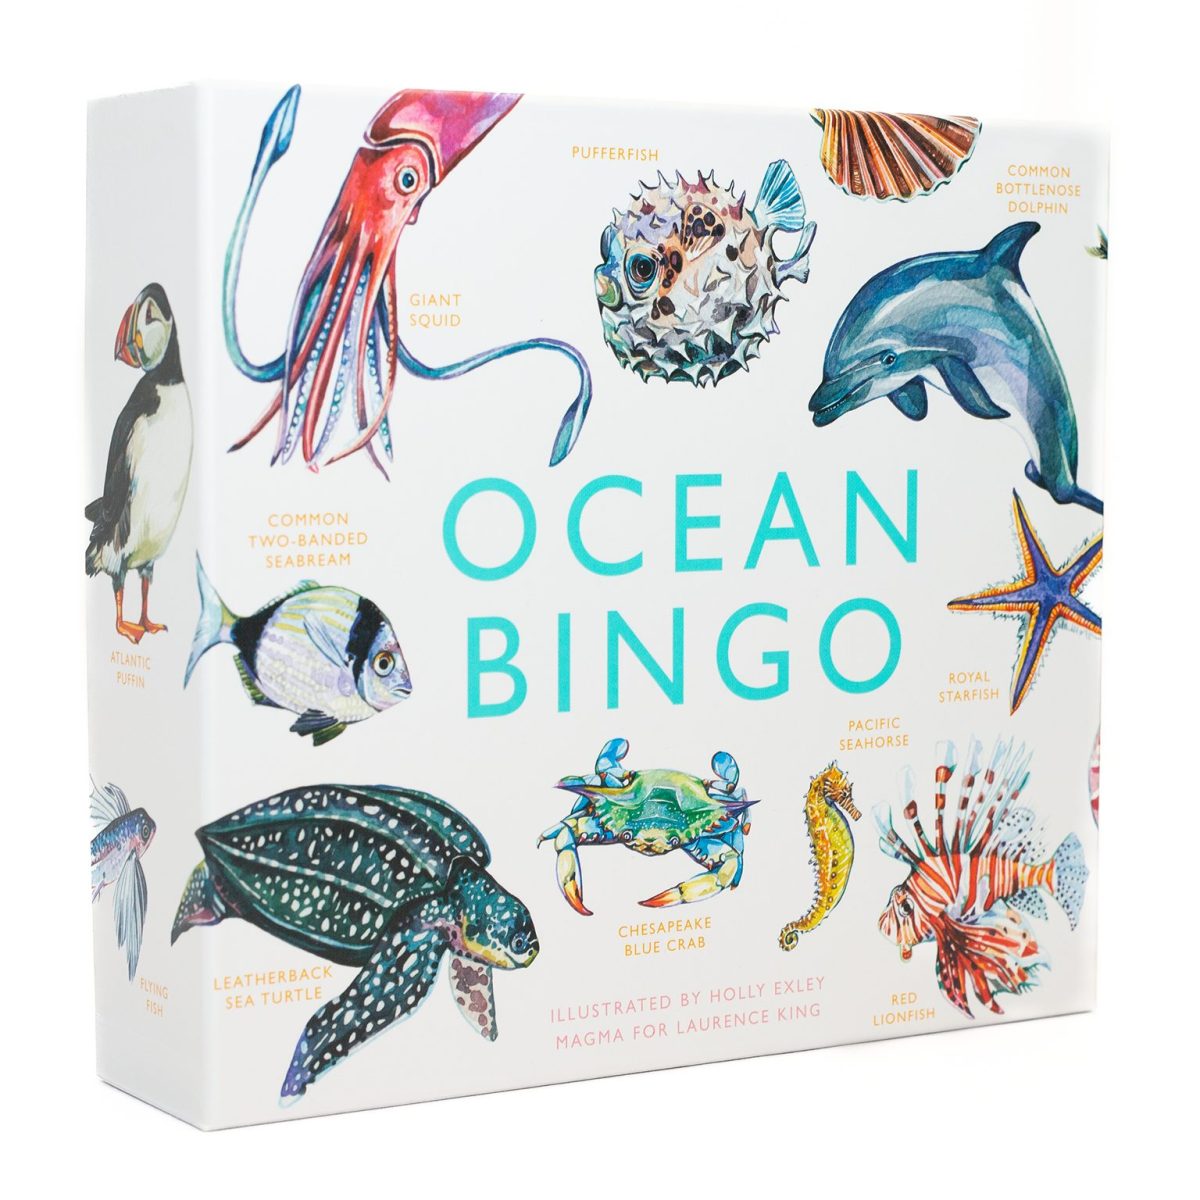 Ocean bingo white box with sea life illustrations